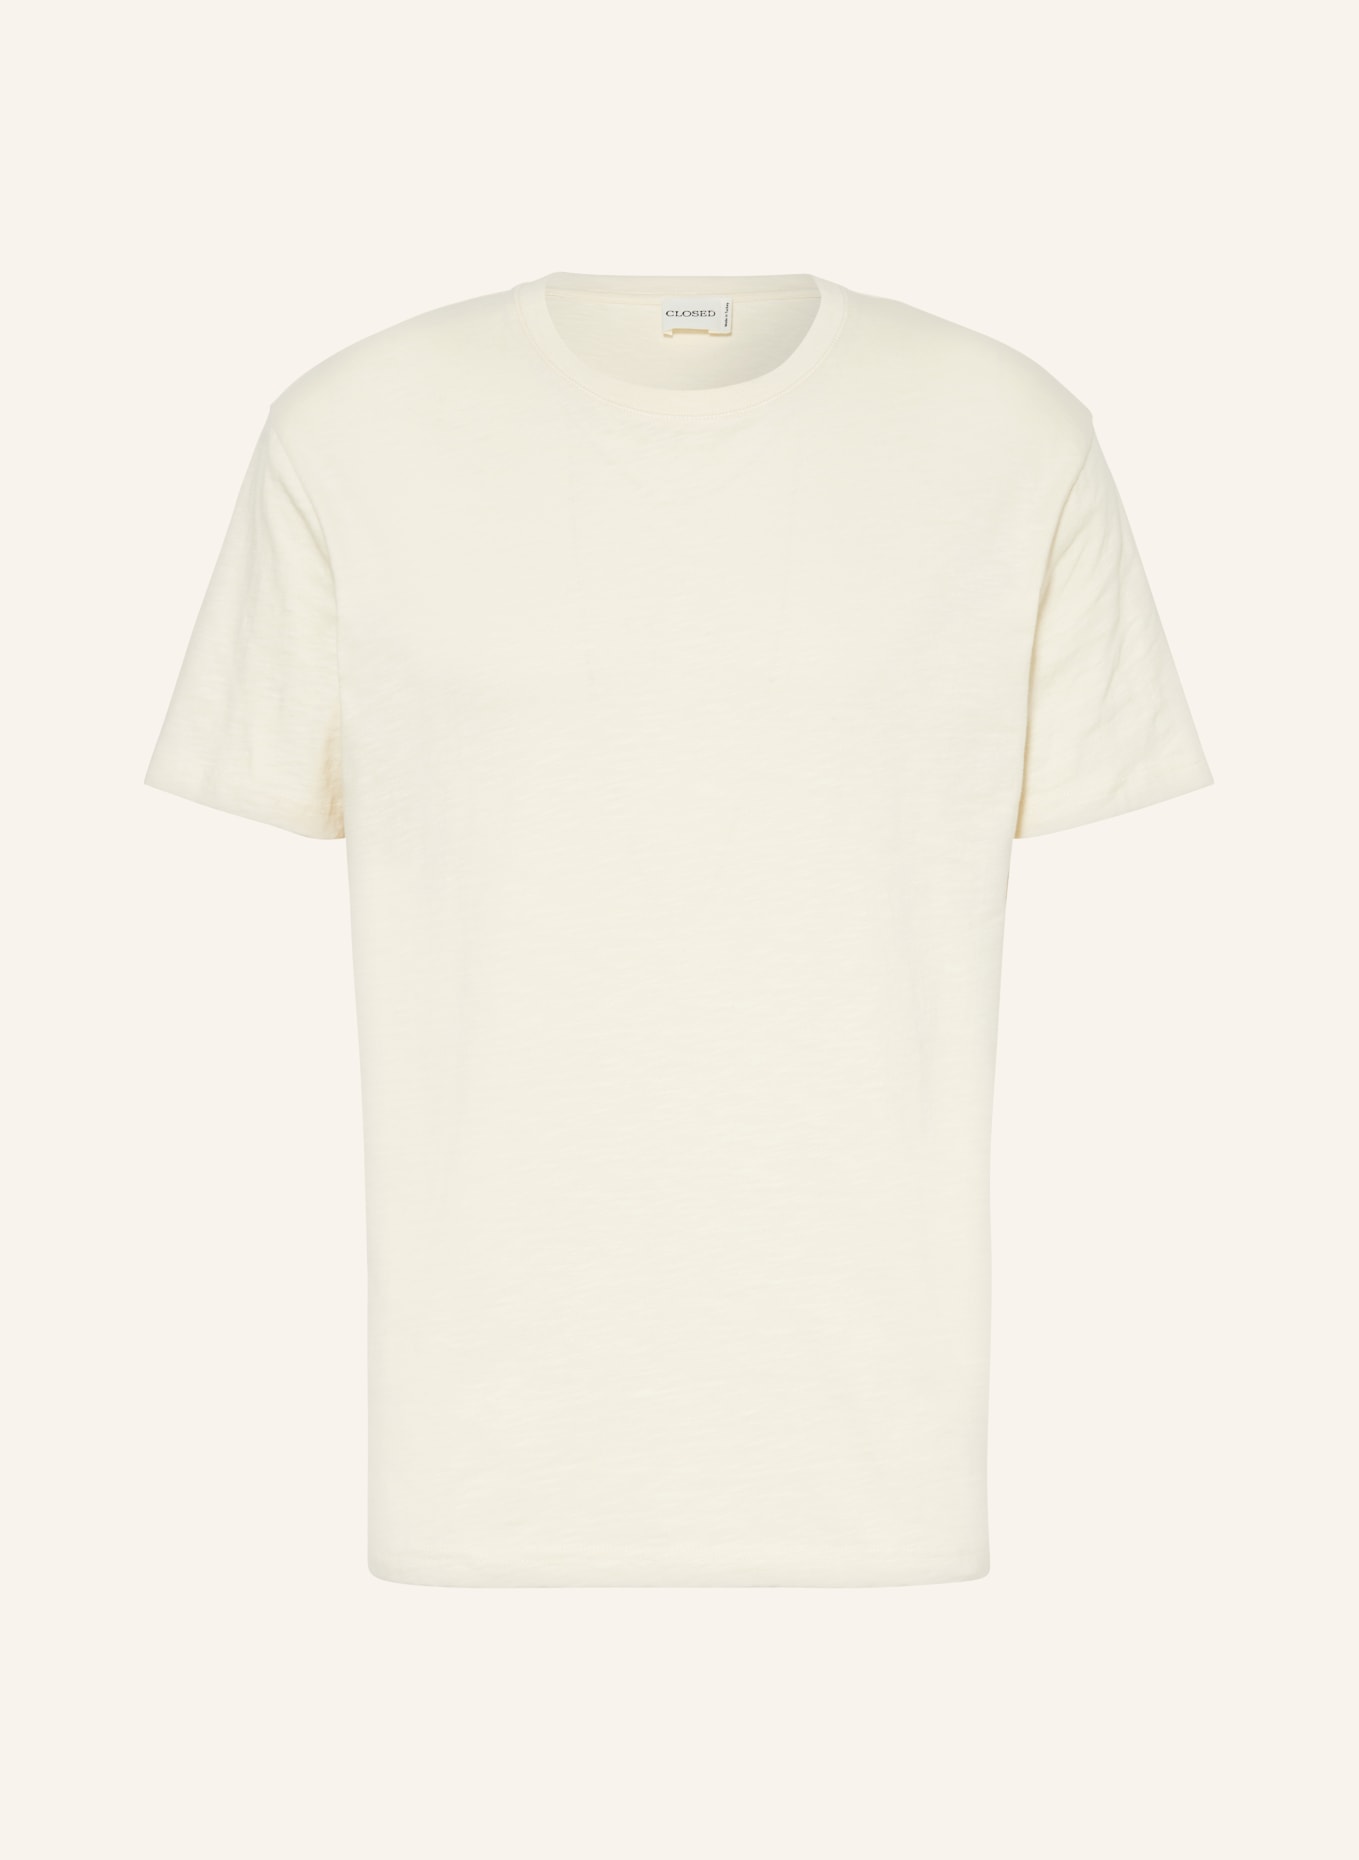 CLOSED T-shirt, Color: CREAM (Image 1)